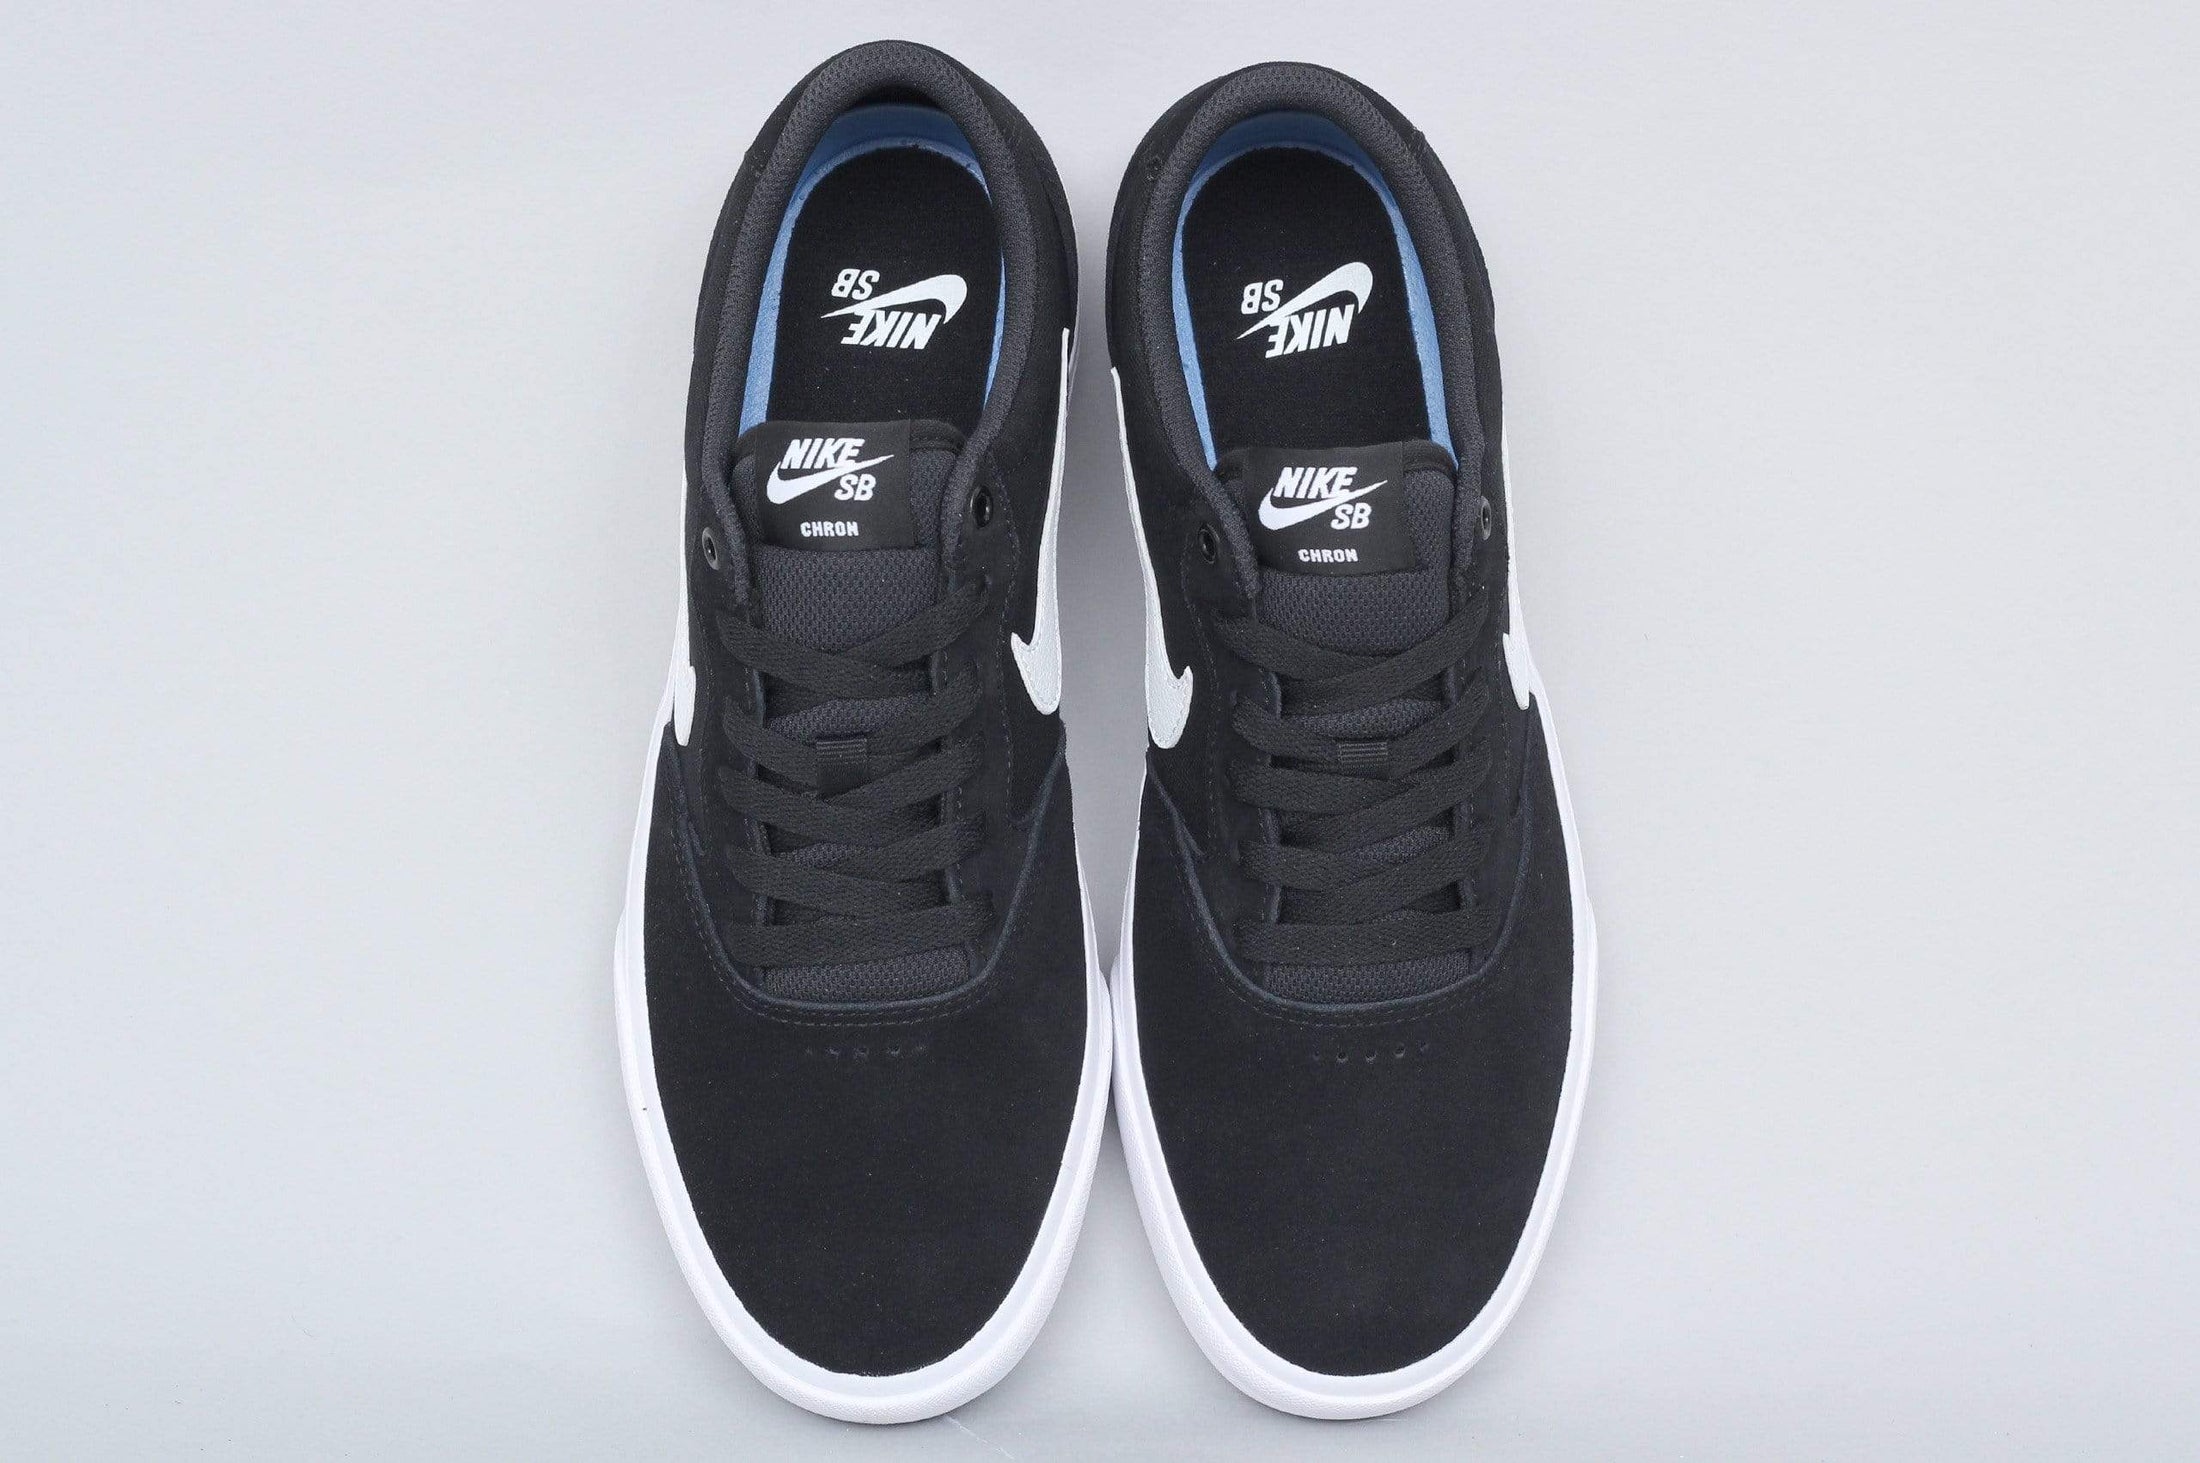 Nike SB Chron SLR Shoes Black / White